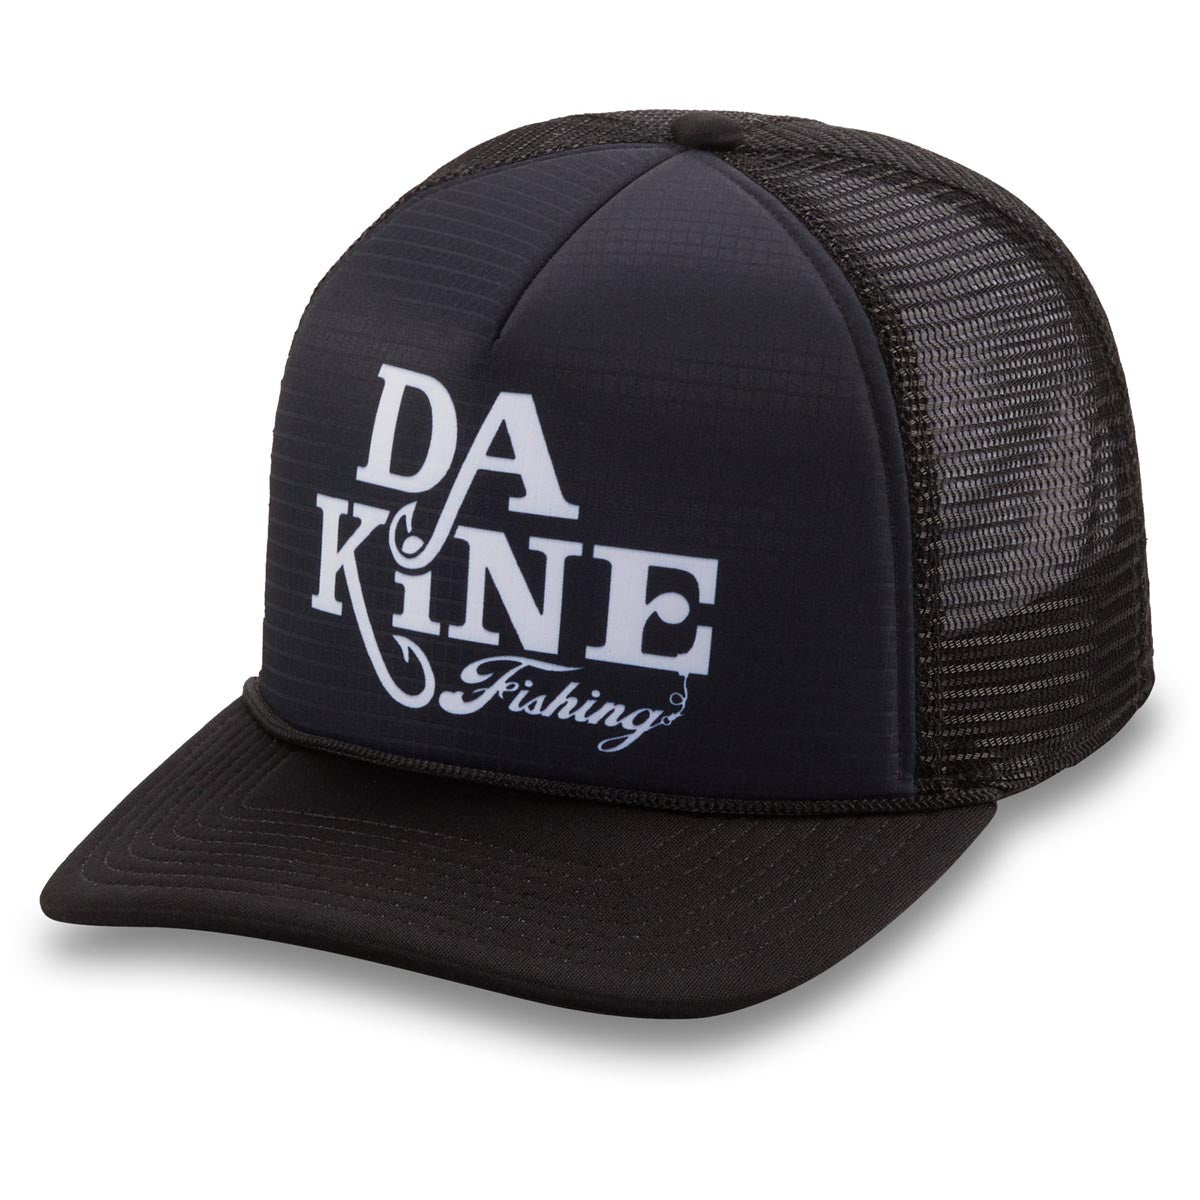 Dakine Vacation Trucker Hat - Black image 1